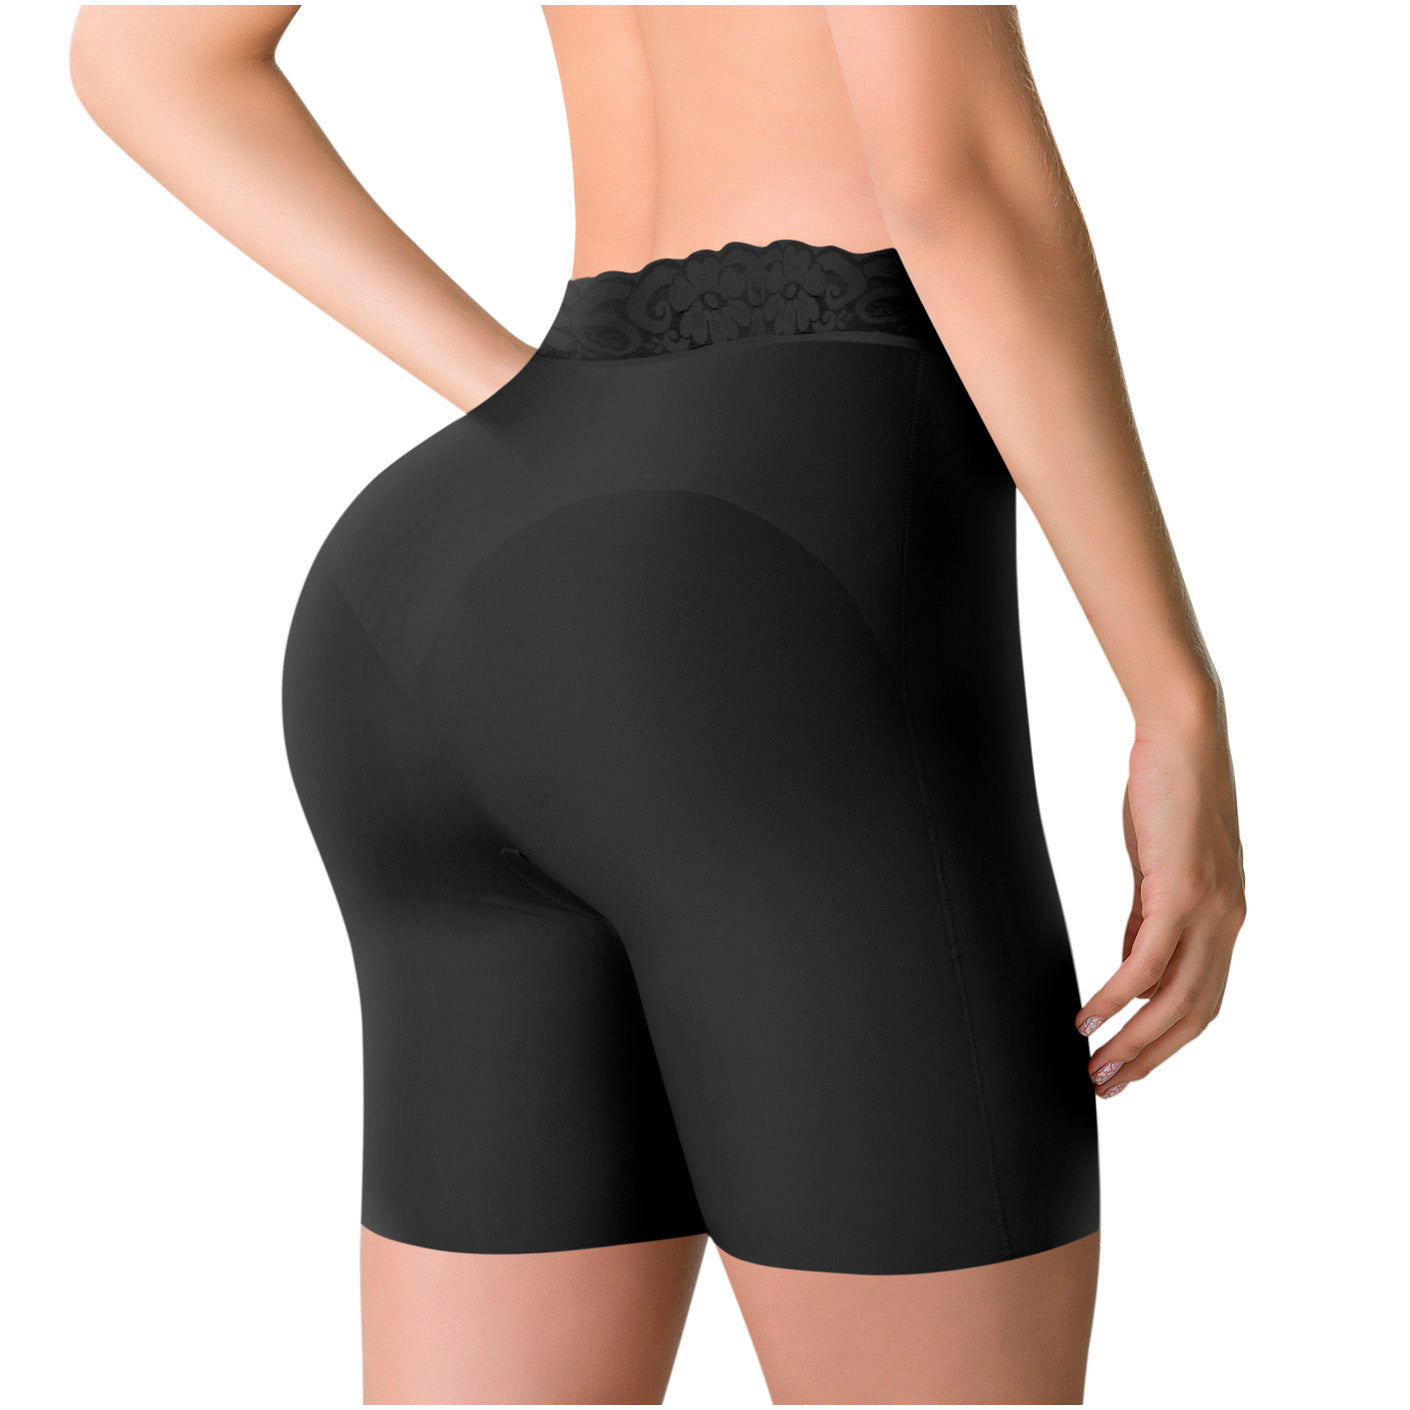 ROMANZA 2054 - Women's Colombian Slimming Shaper Shorts